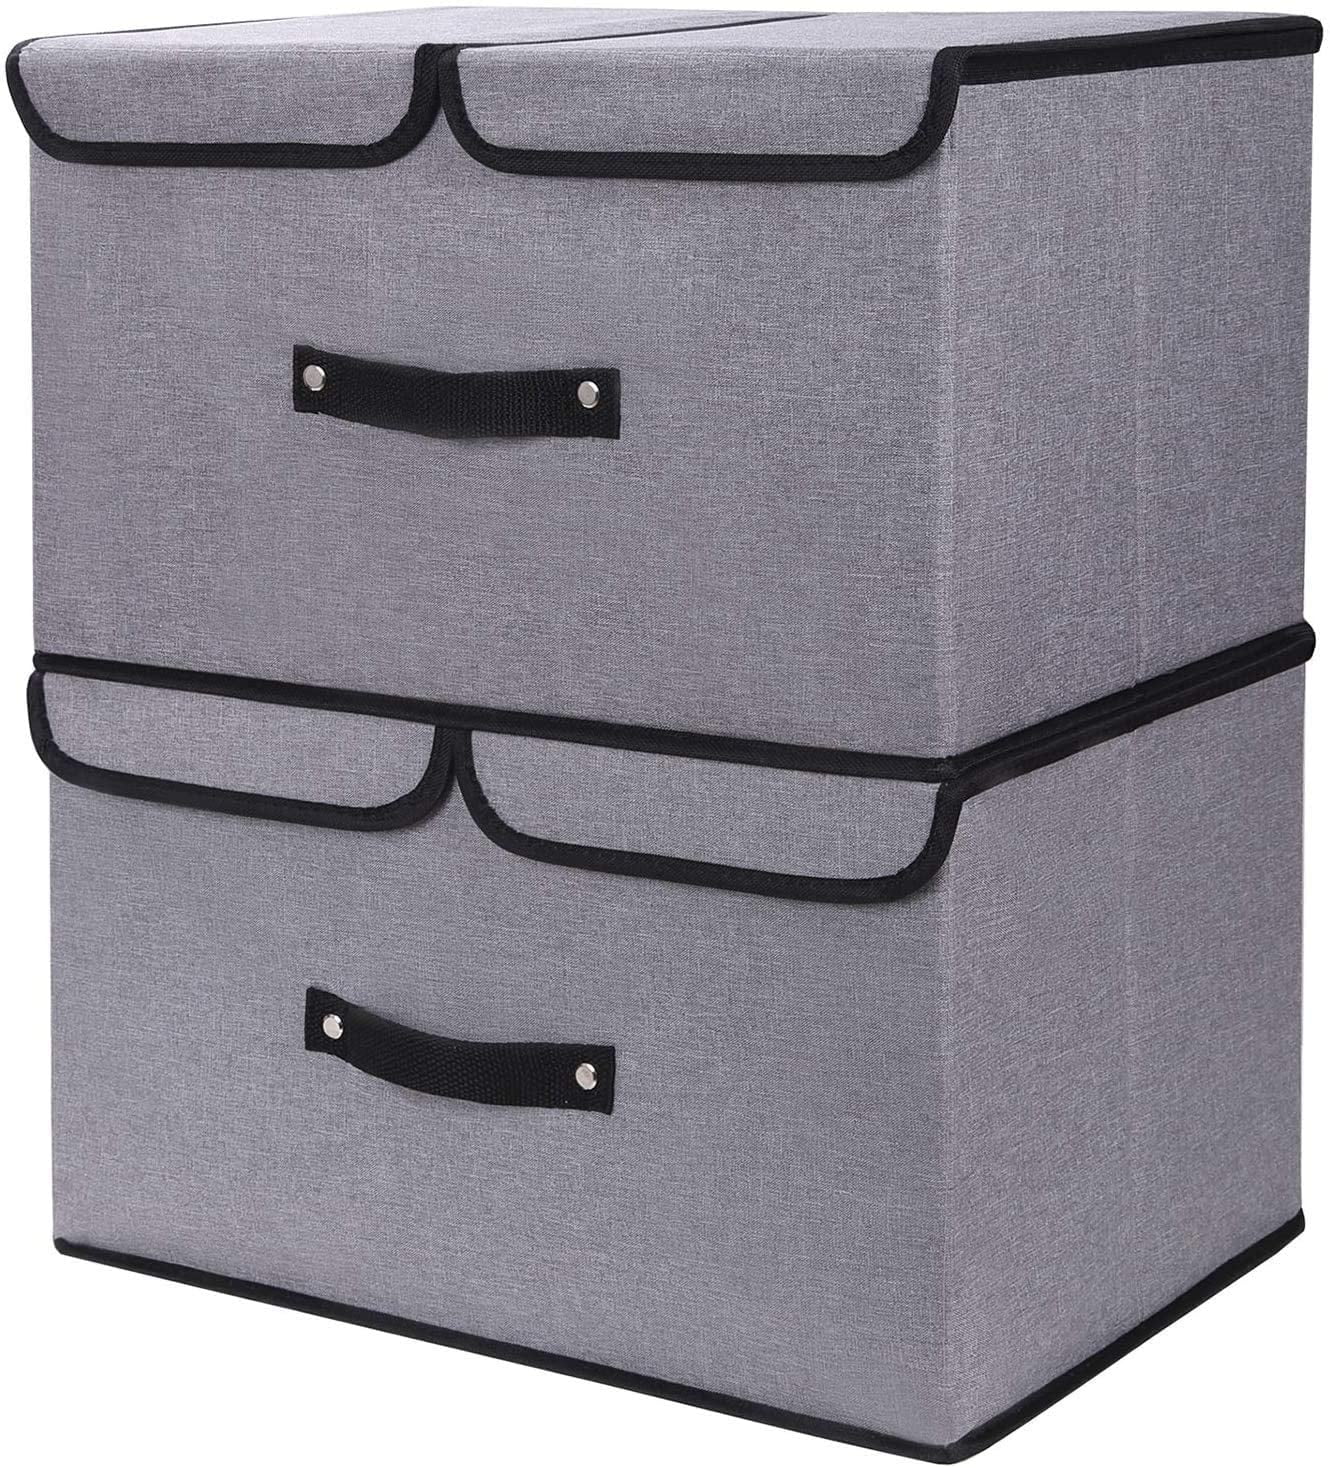 Durable Folding Storage Bins Organizer 2 Tier,Stackable Bins with